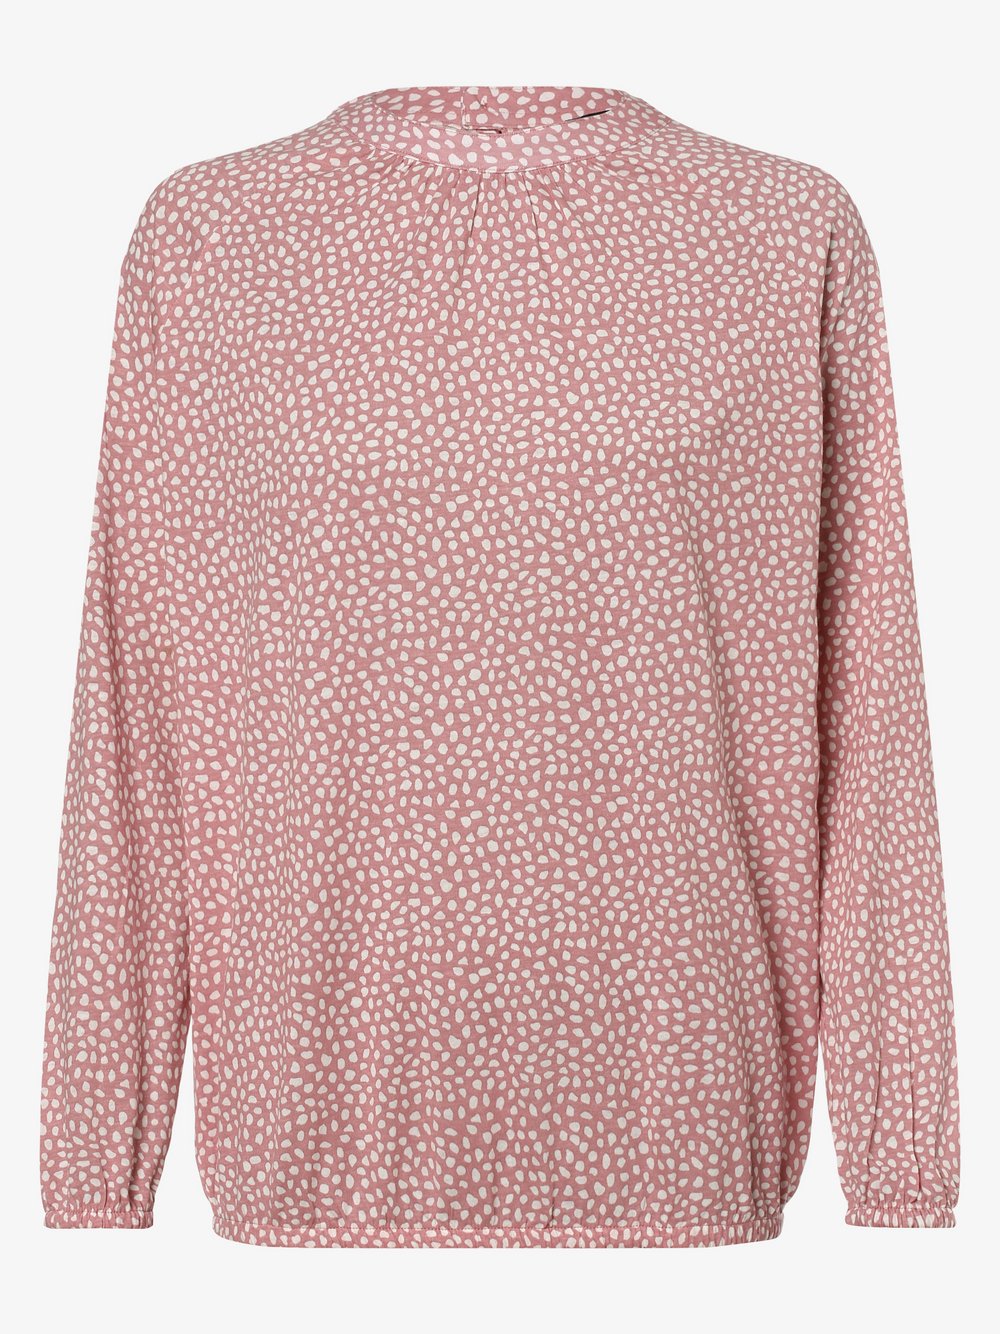 Franco Callegari - Damska koszulka z długim rękawem, różowy